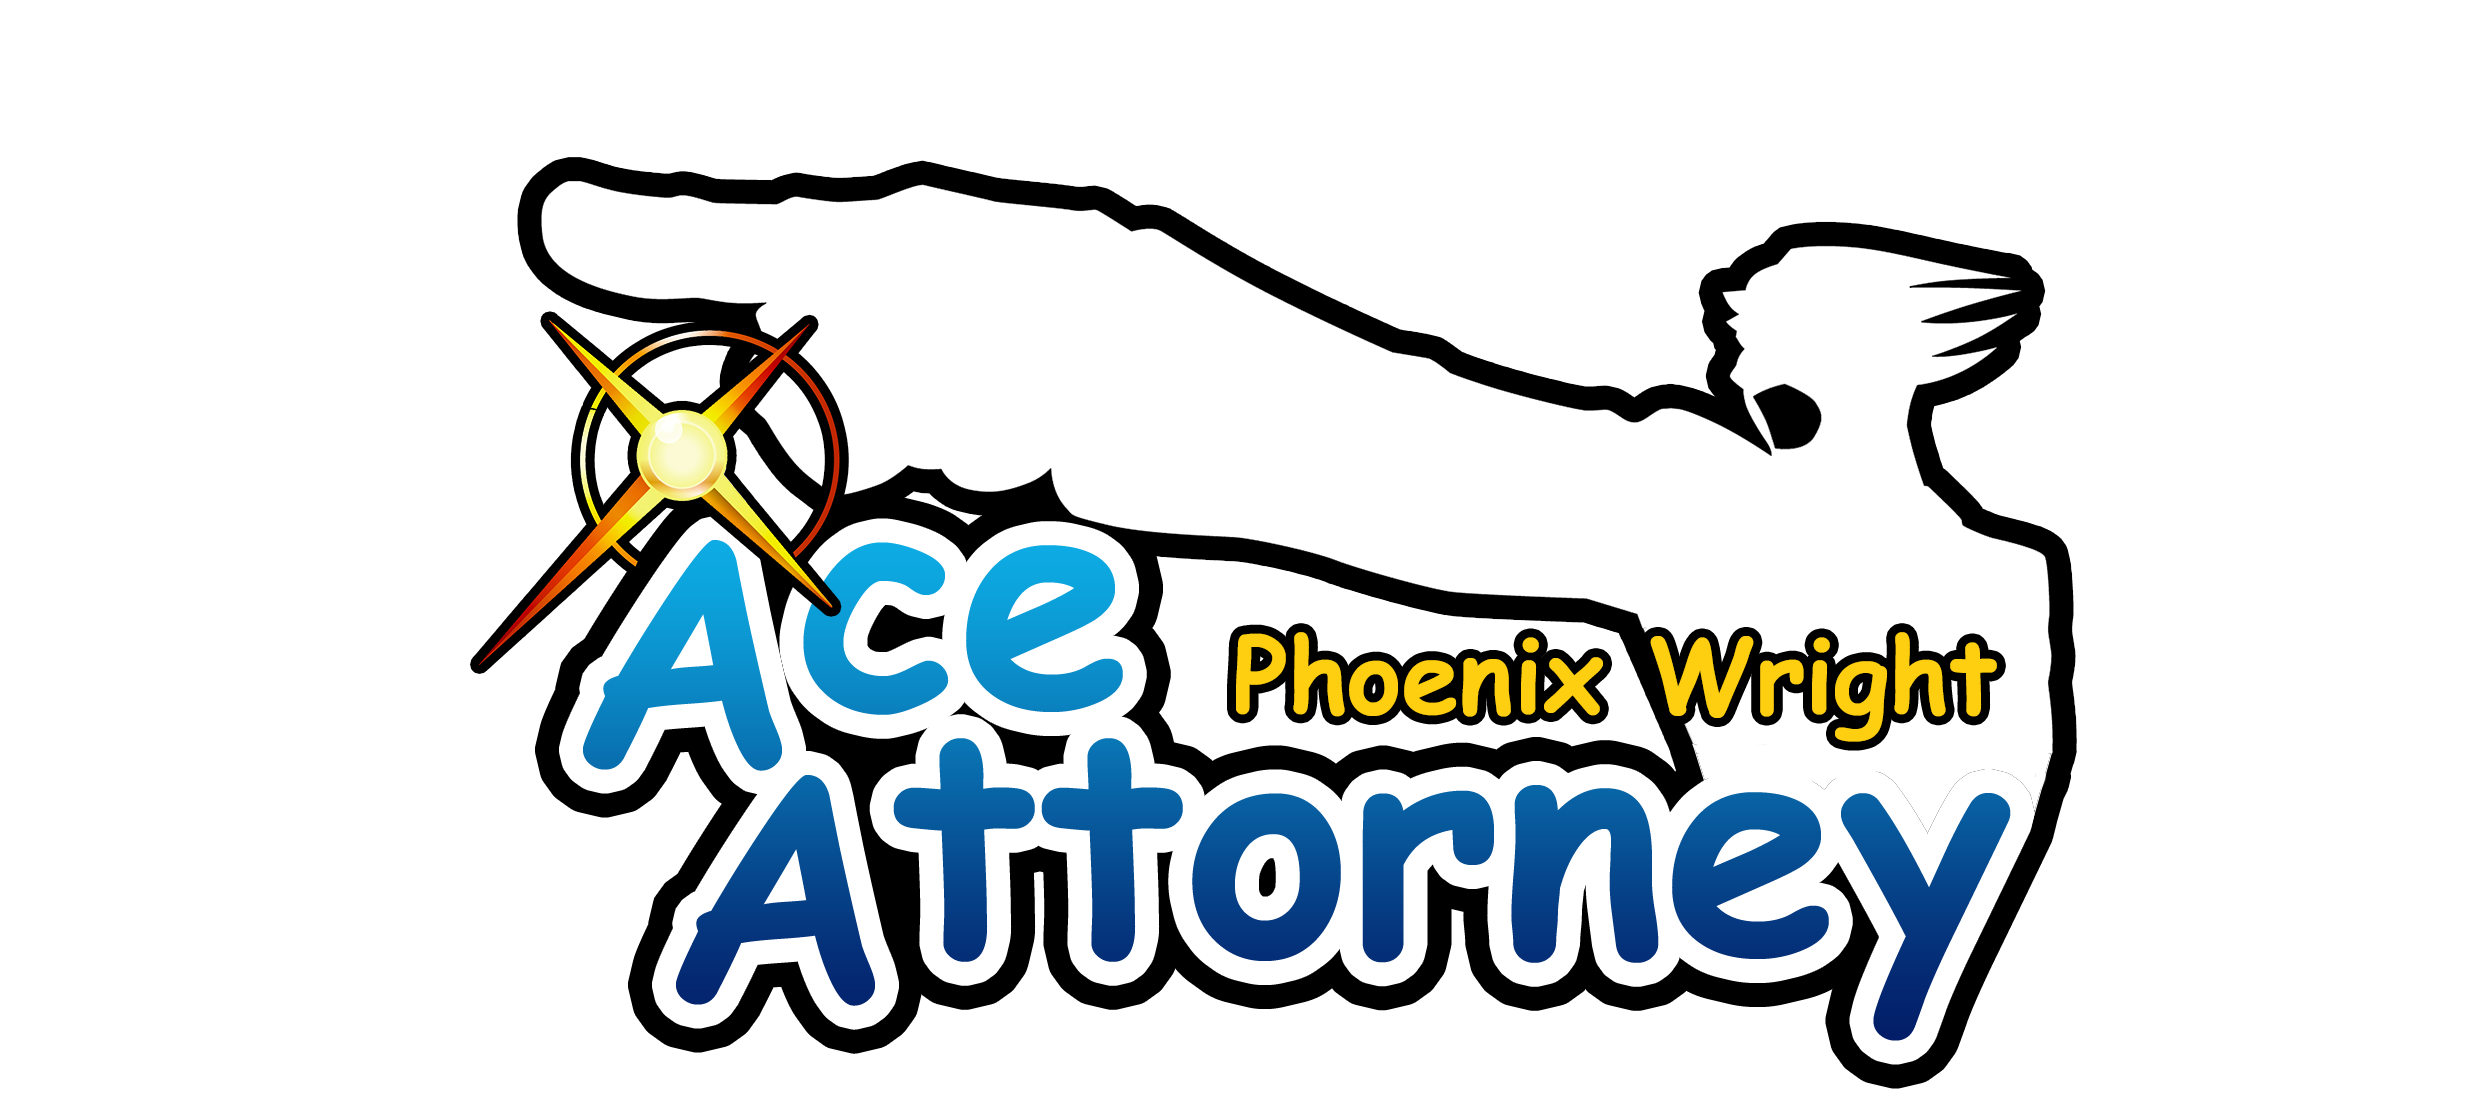 Ace Attorney Logo PNG Transparent Image